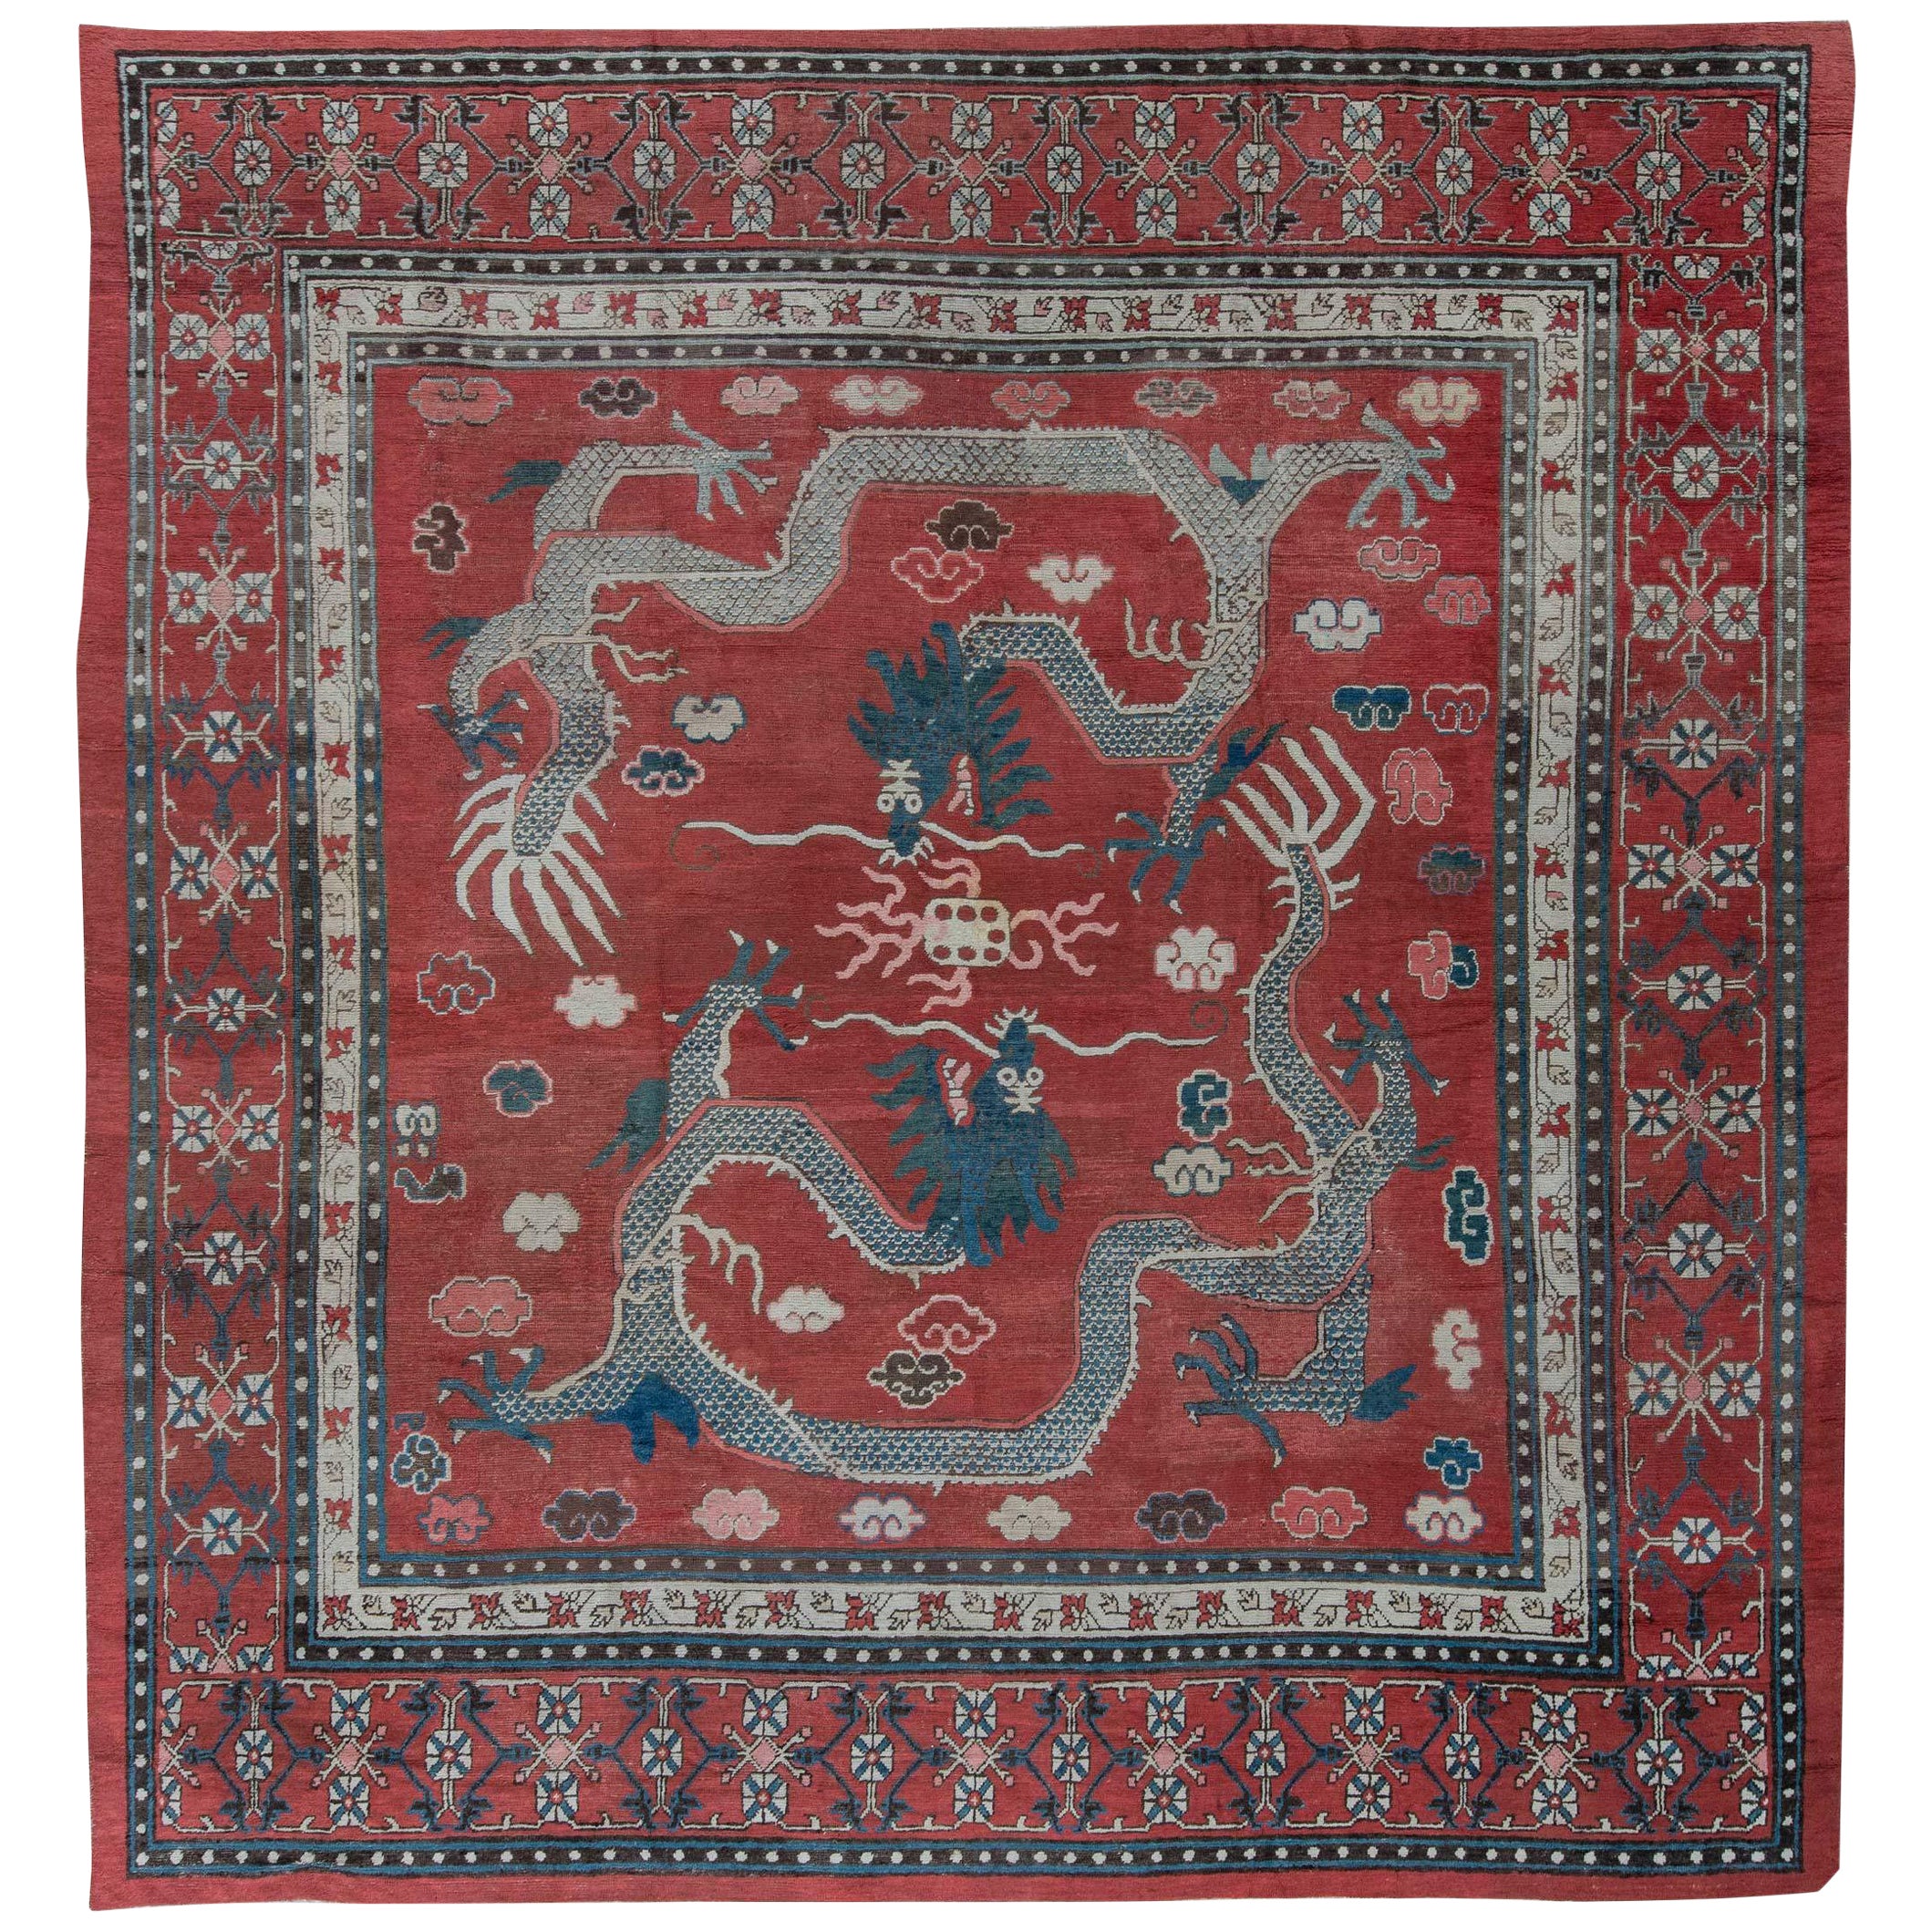 Early 20th Century Samarkand Dragon Carpet